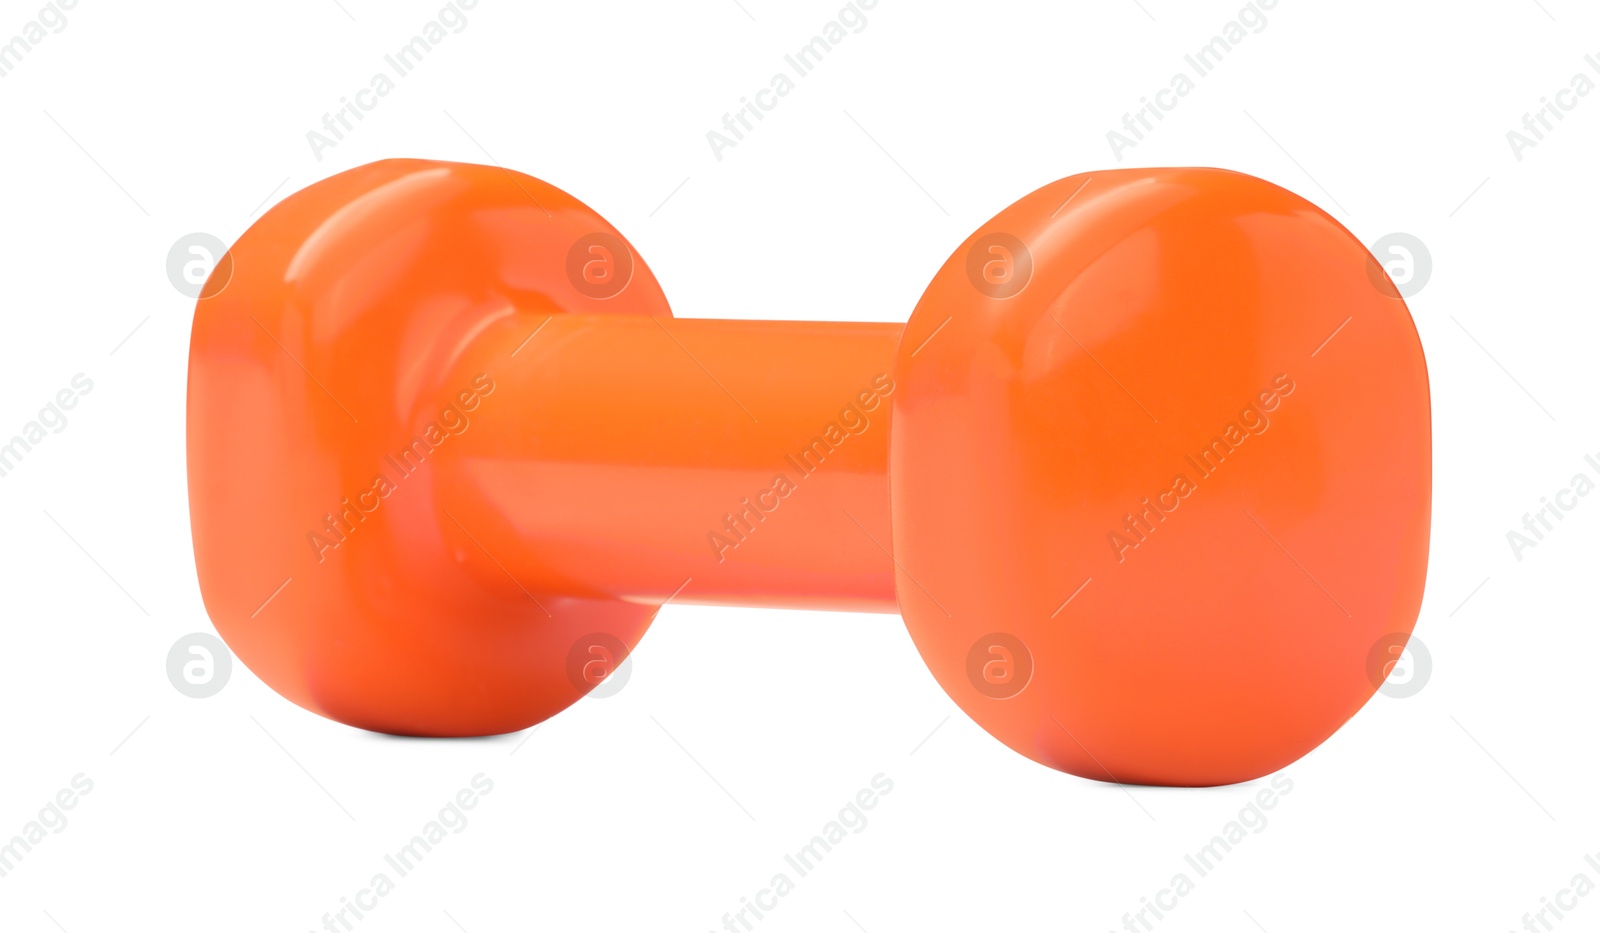 Photo of Orange dumbbell isolated on white. Sports equipment